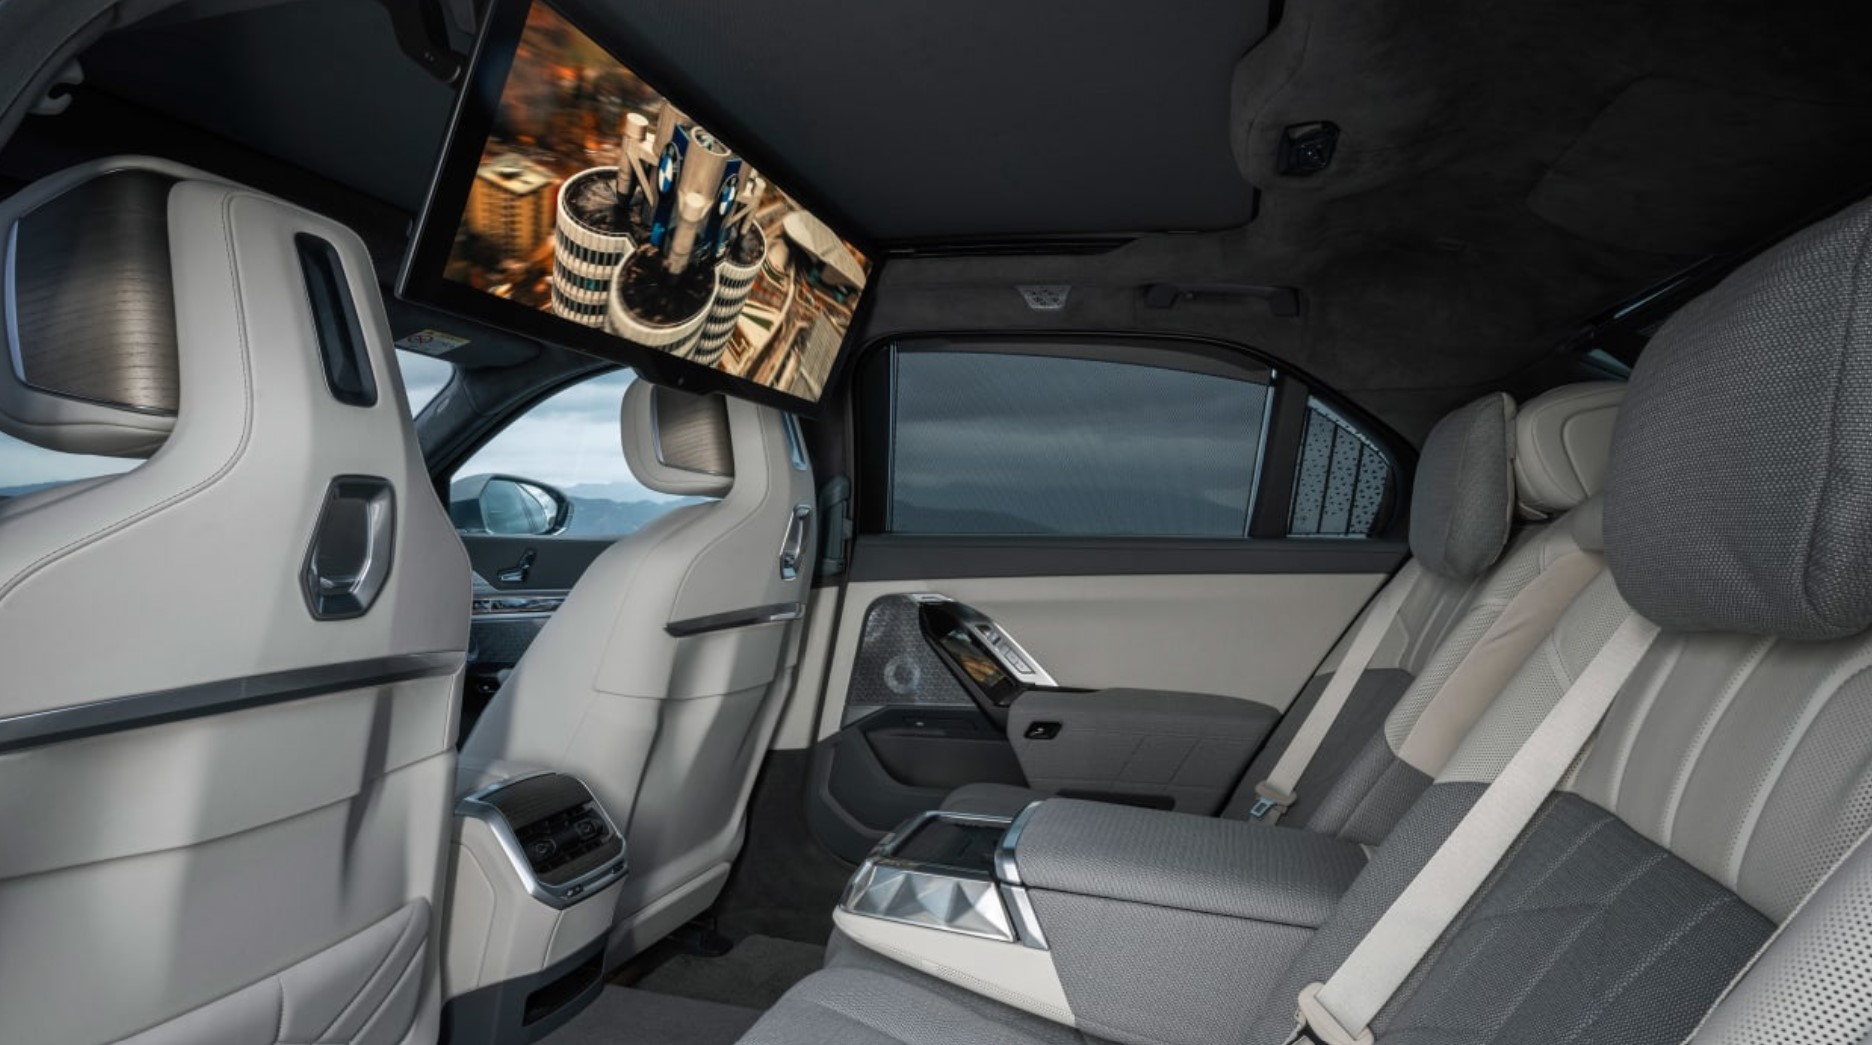 2022 BMW 7 series i7 interior 1